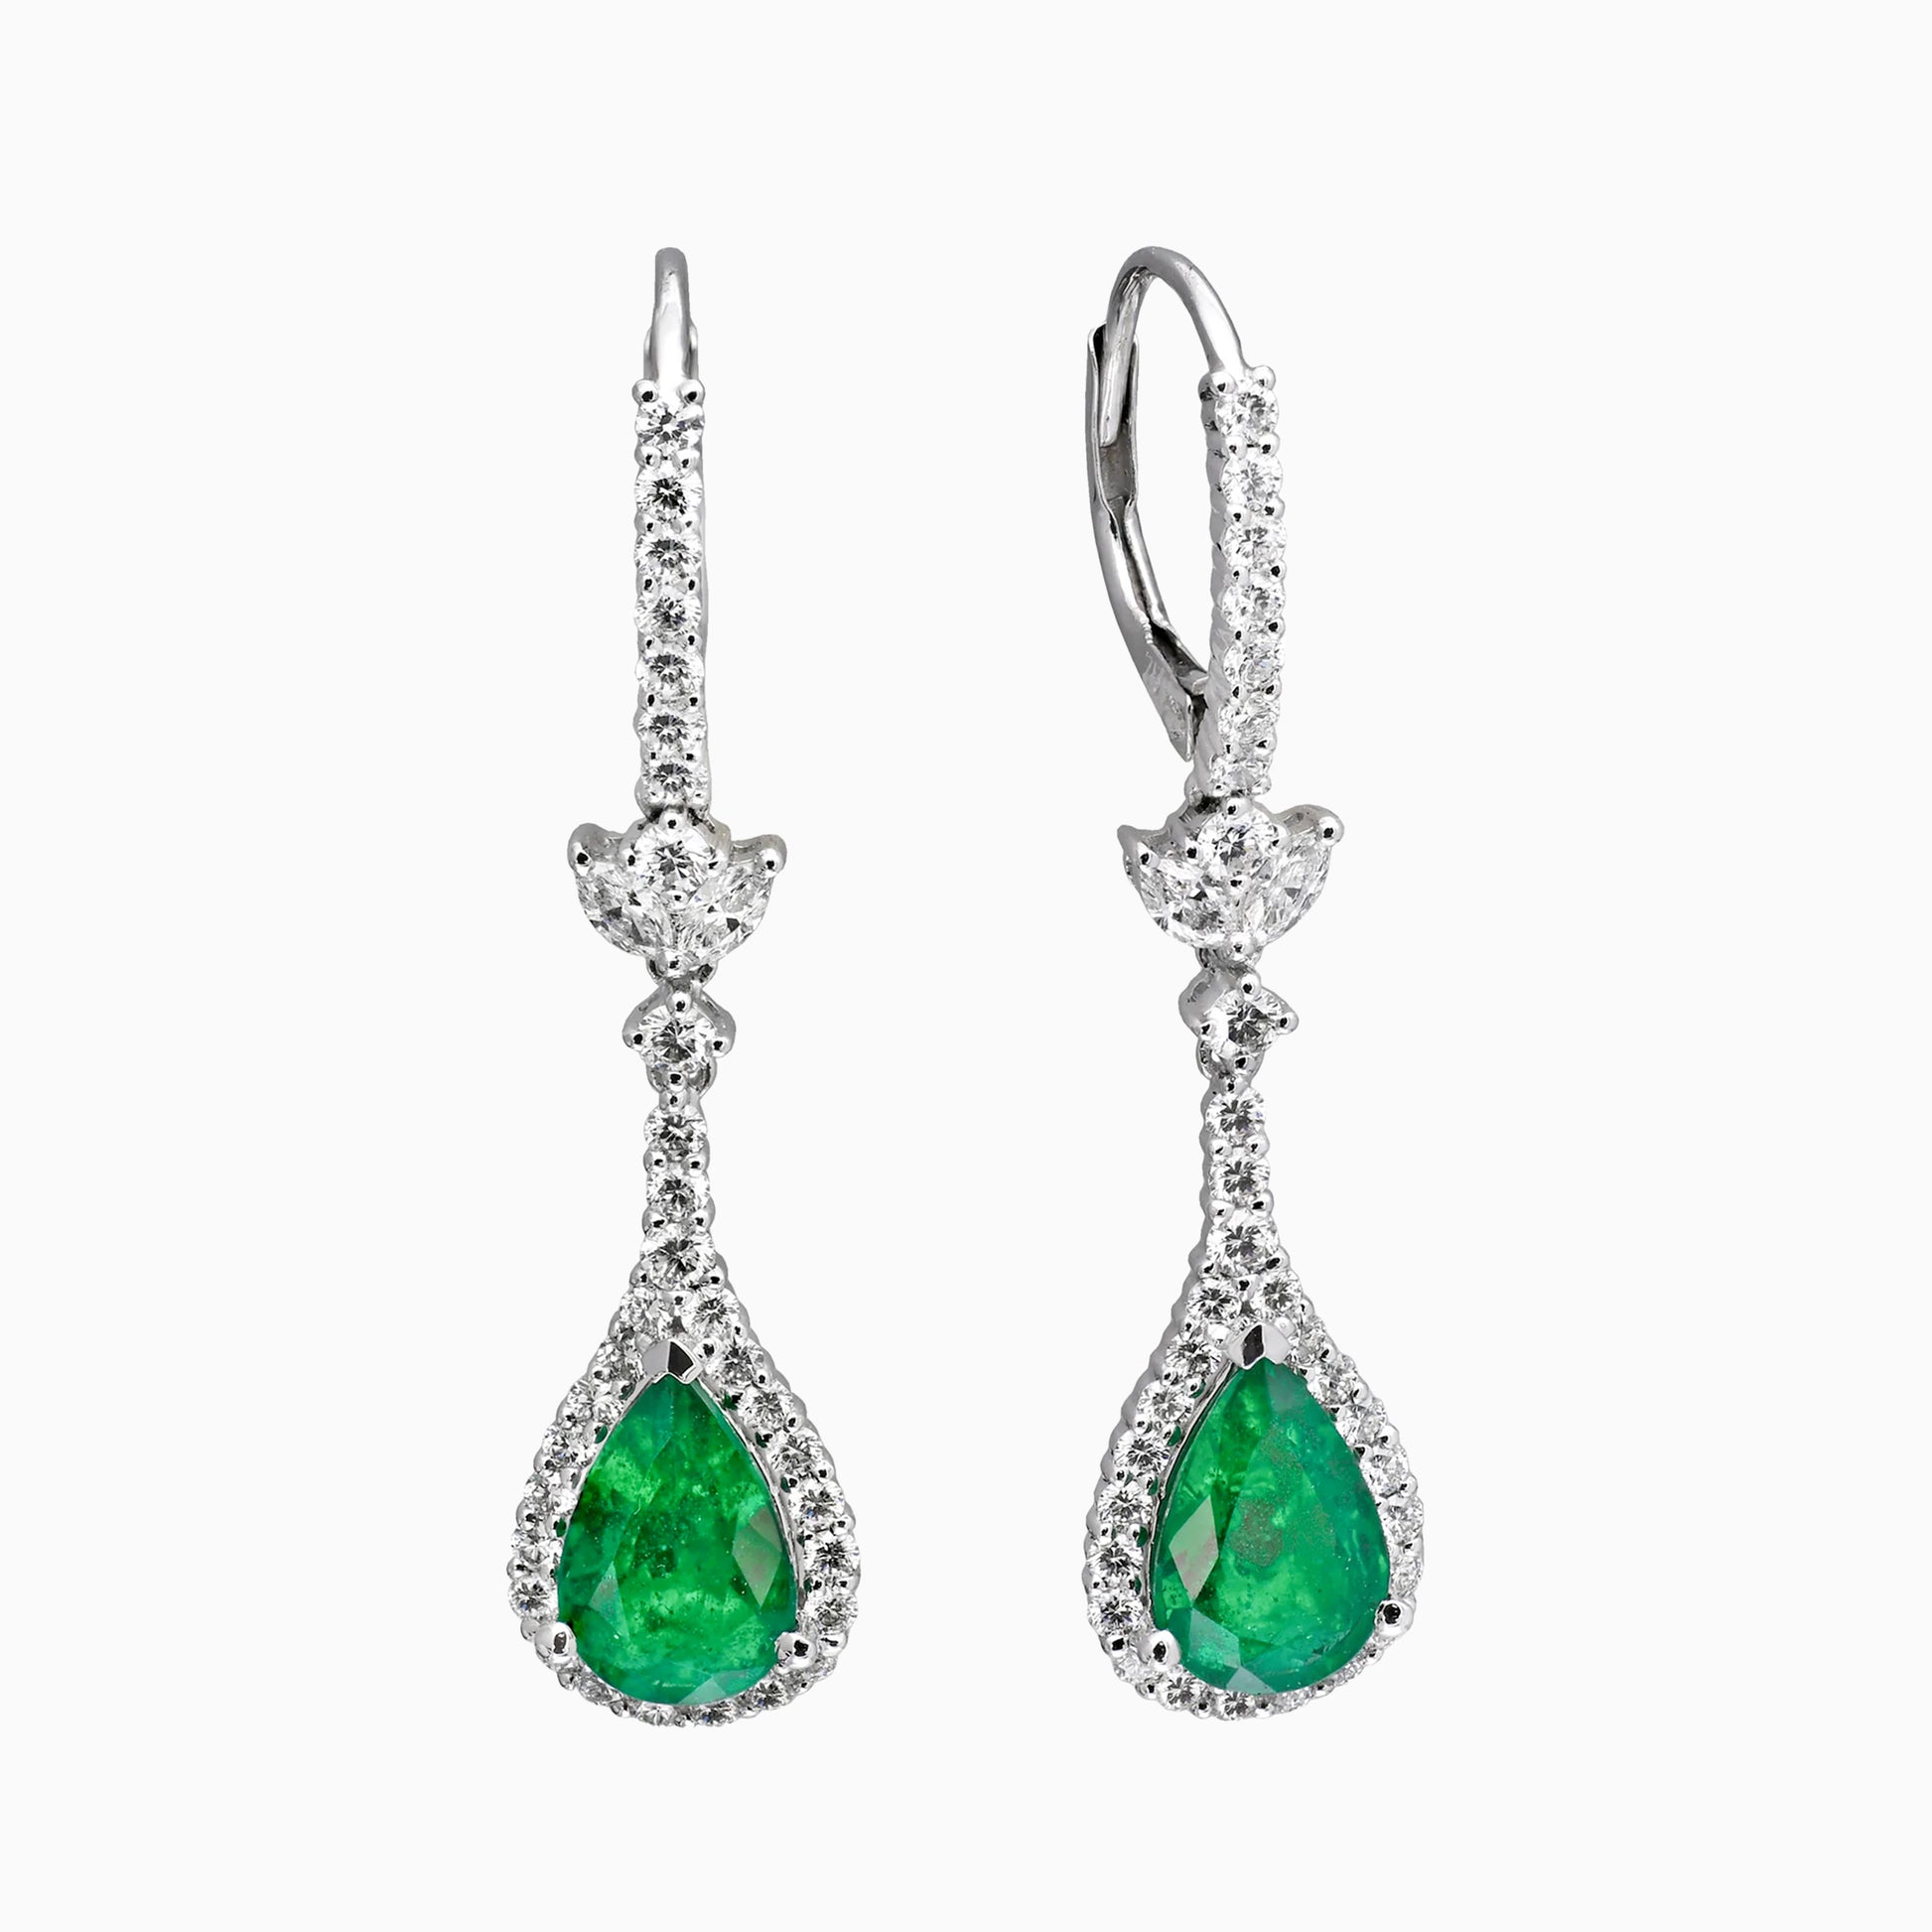 Pair of Zambian Emerald & Diamond Drop Earrings on a white background 